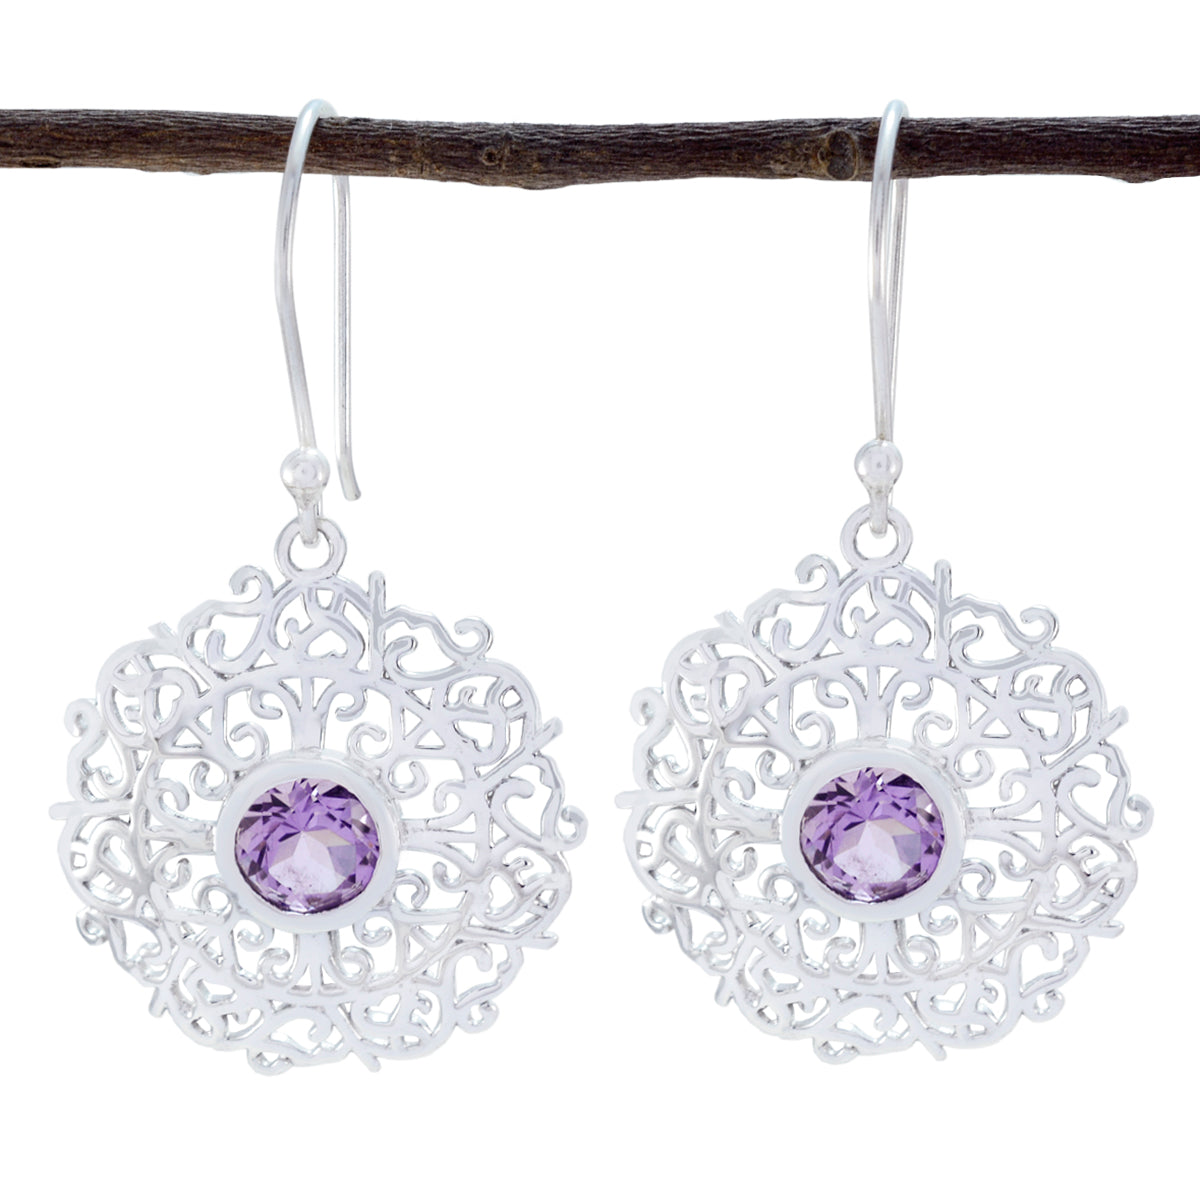 Riyo Good Gemstones round Faceted Purple Amethyst Silver Earrings gift for college